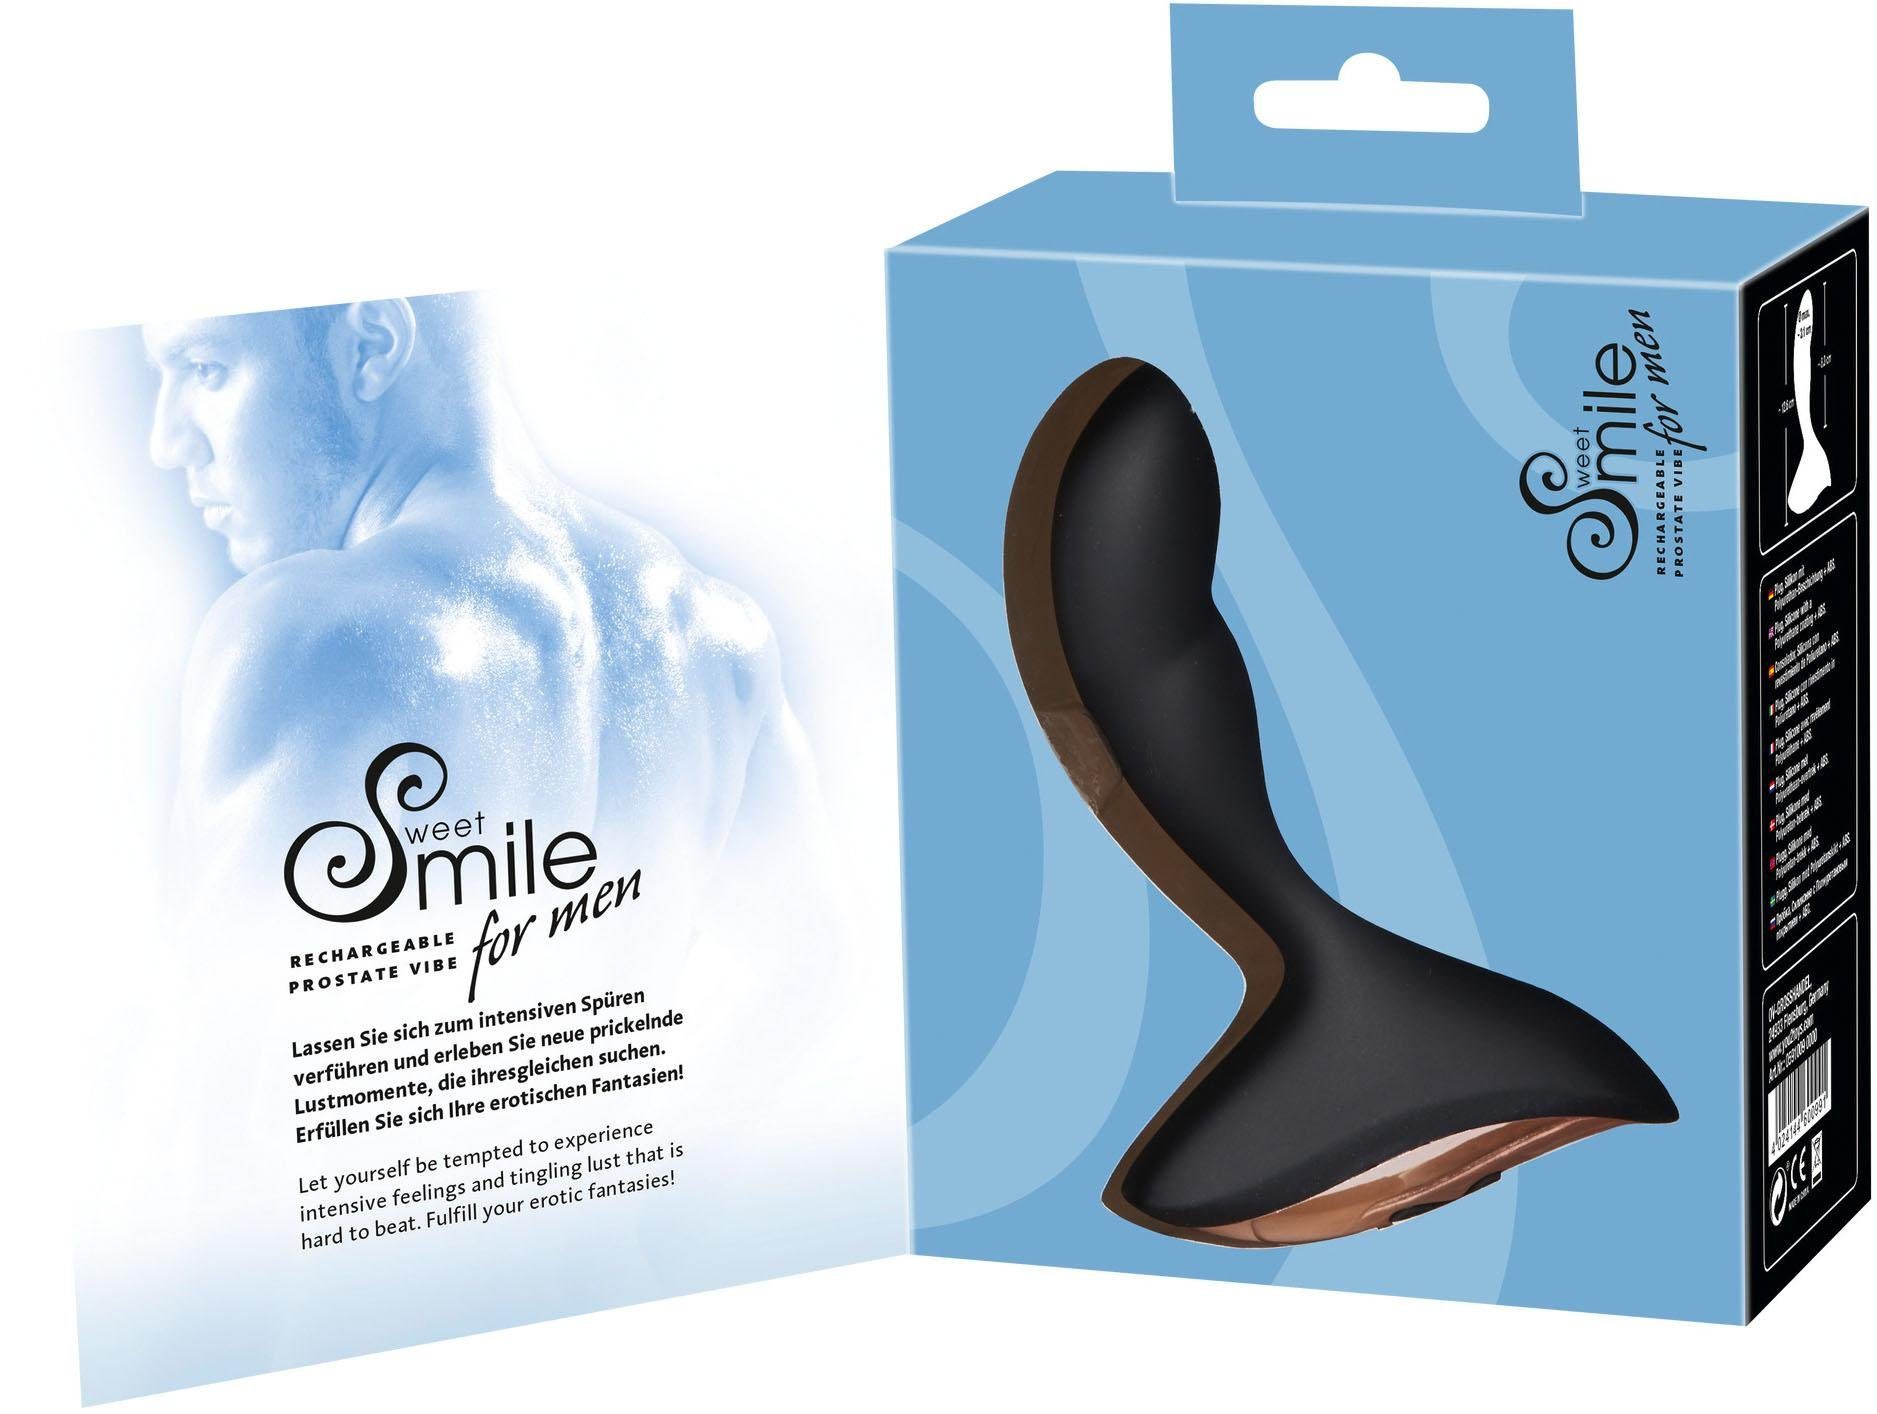 Sweet Smile Smile Analvibrator P-Punkt Vibrator, Prostata Stimulation